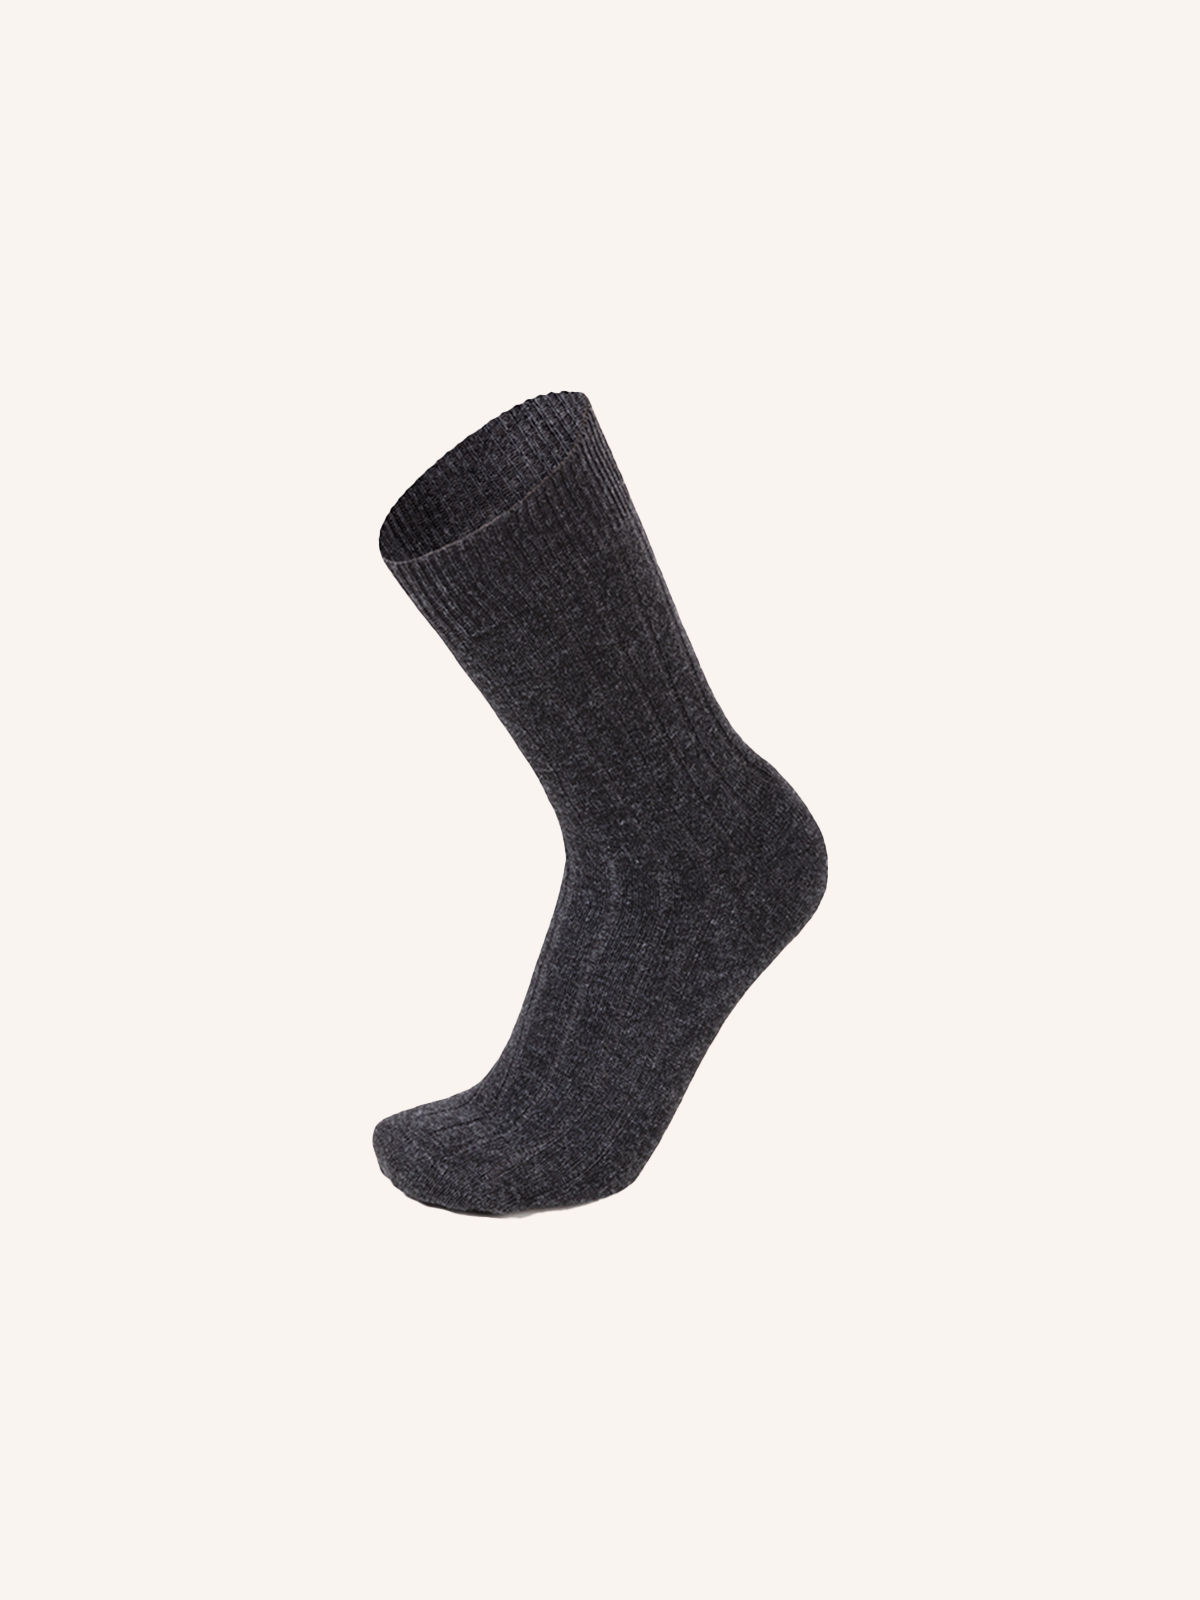 Short Cashmere Sock for Men | Plain Color | Pack of 6 pairs | Cashmere C 10